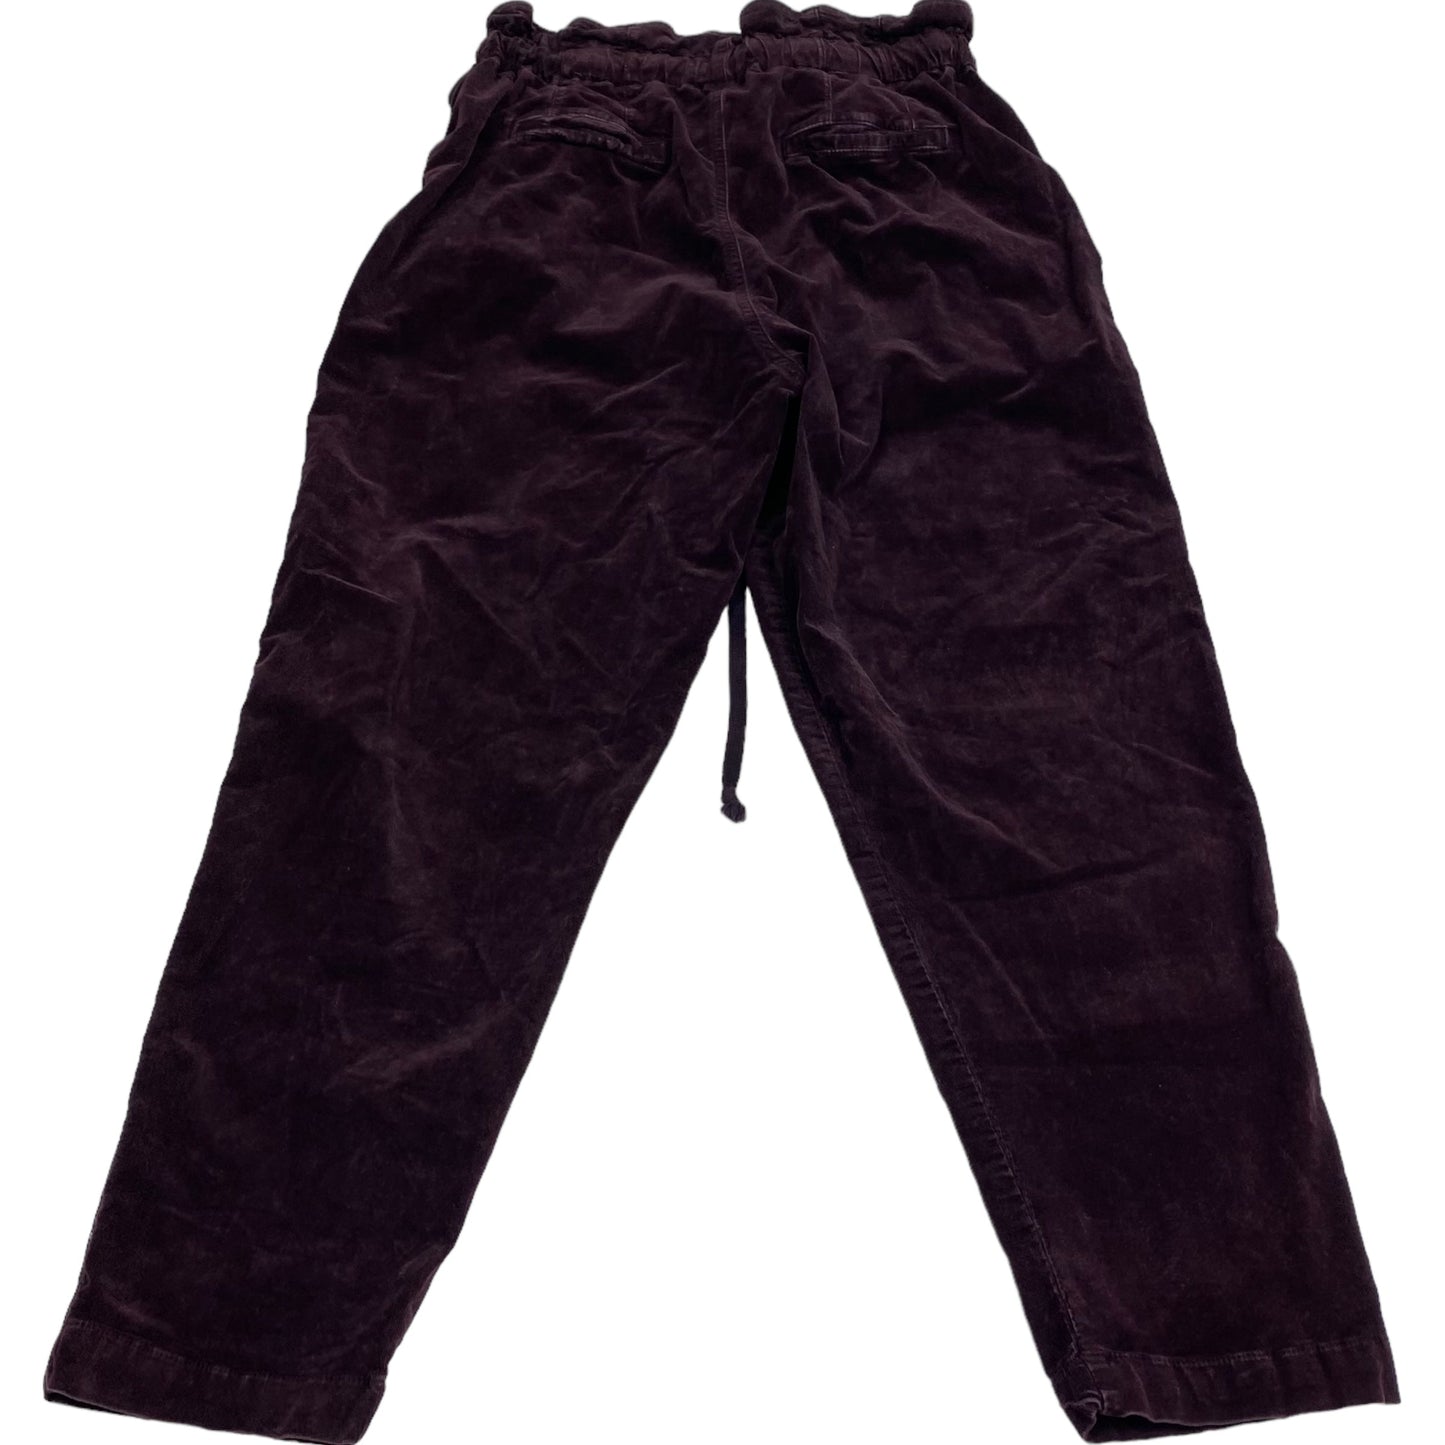 Pants Corduroy By Free People  Size: Xs